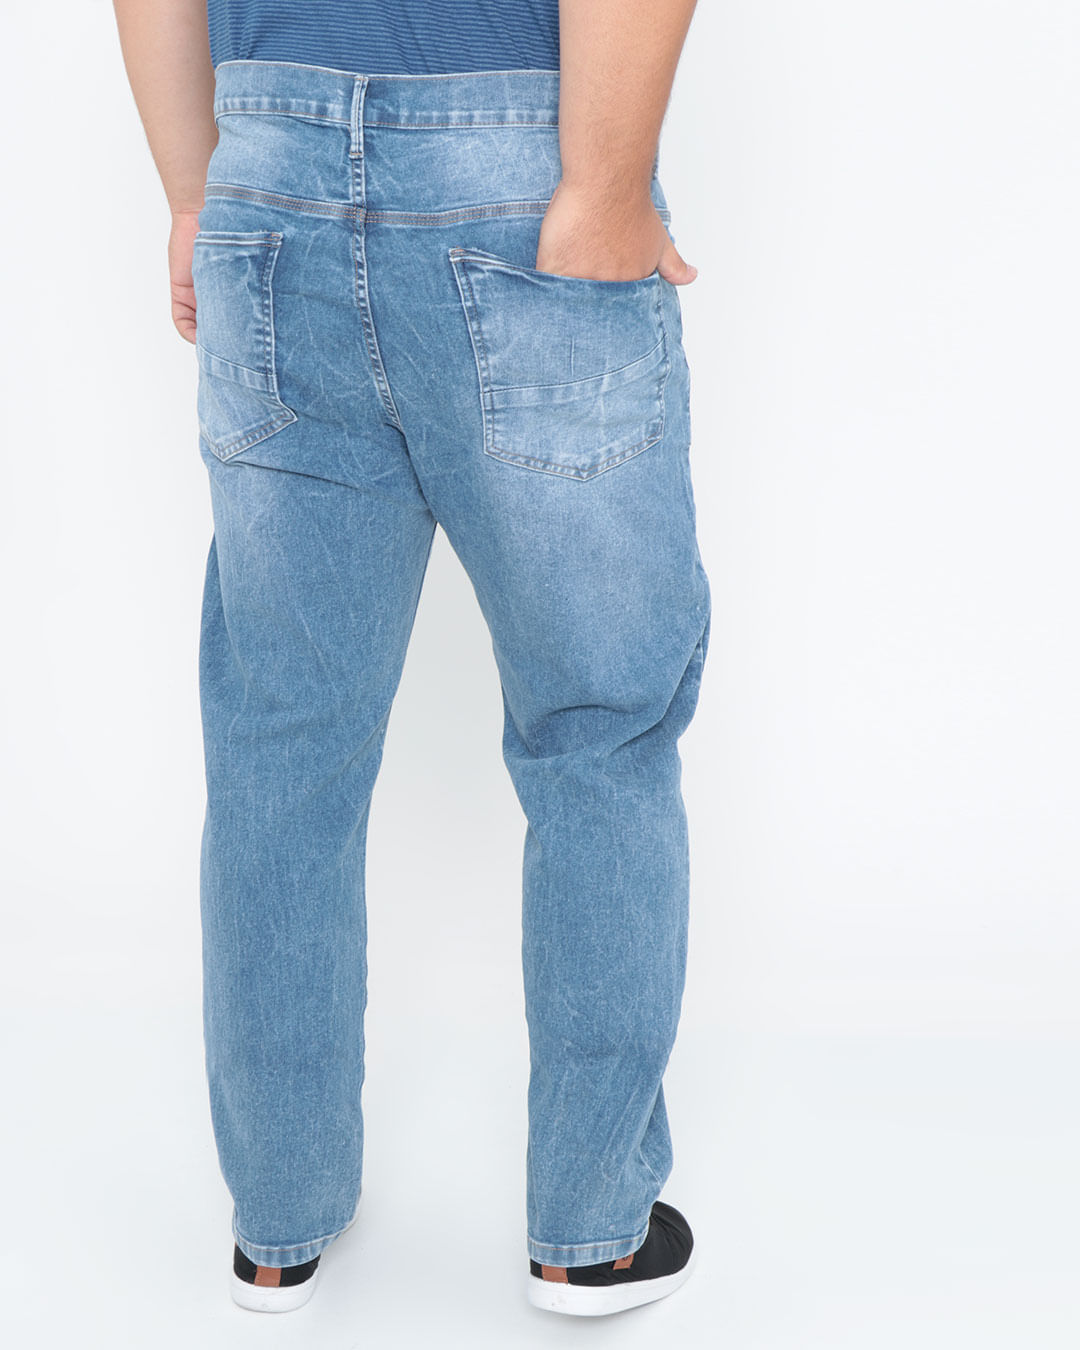 Calca-Jeans-Masculina-Plus-Size-Marmorizado-Azul